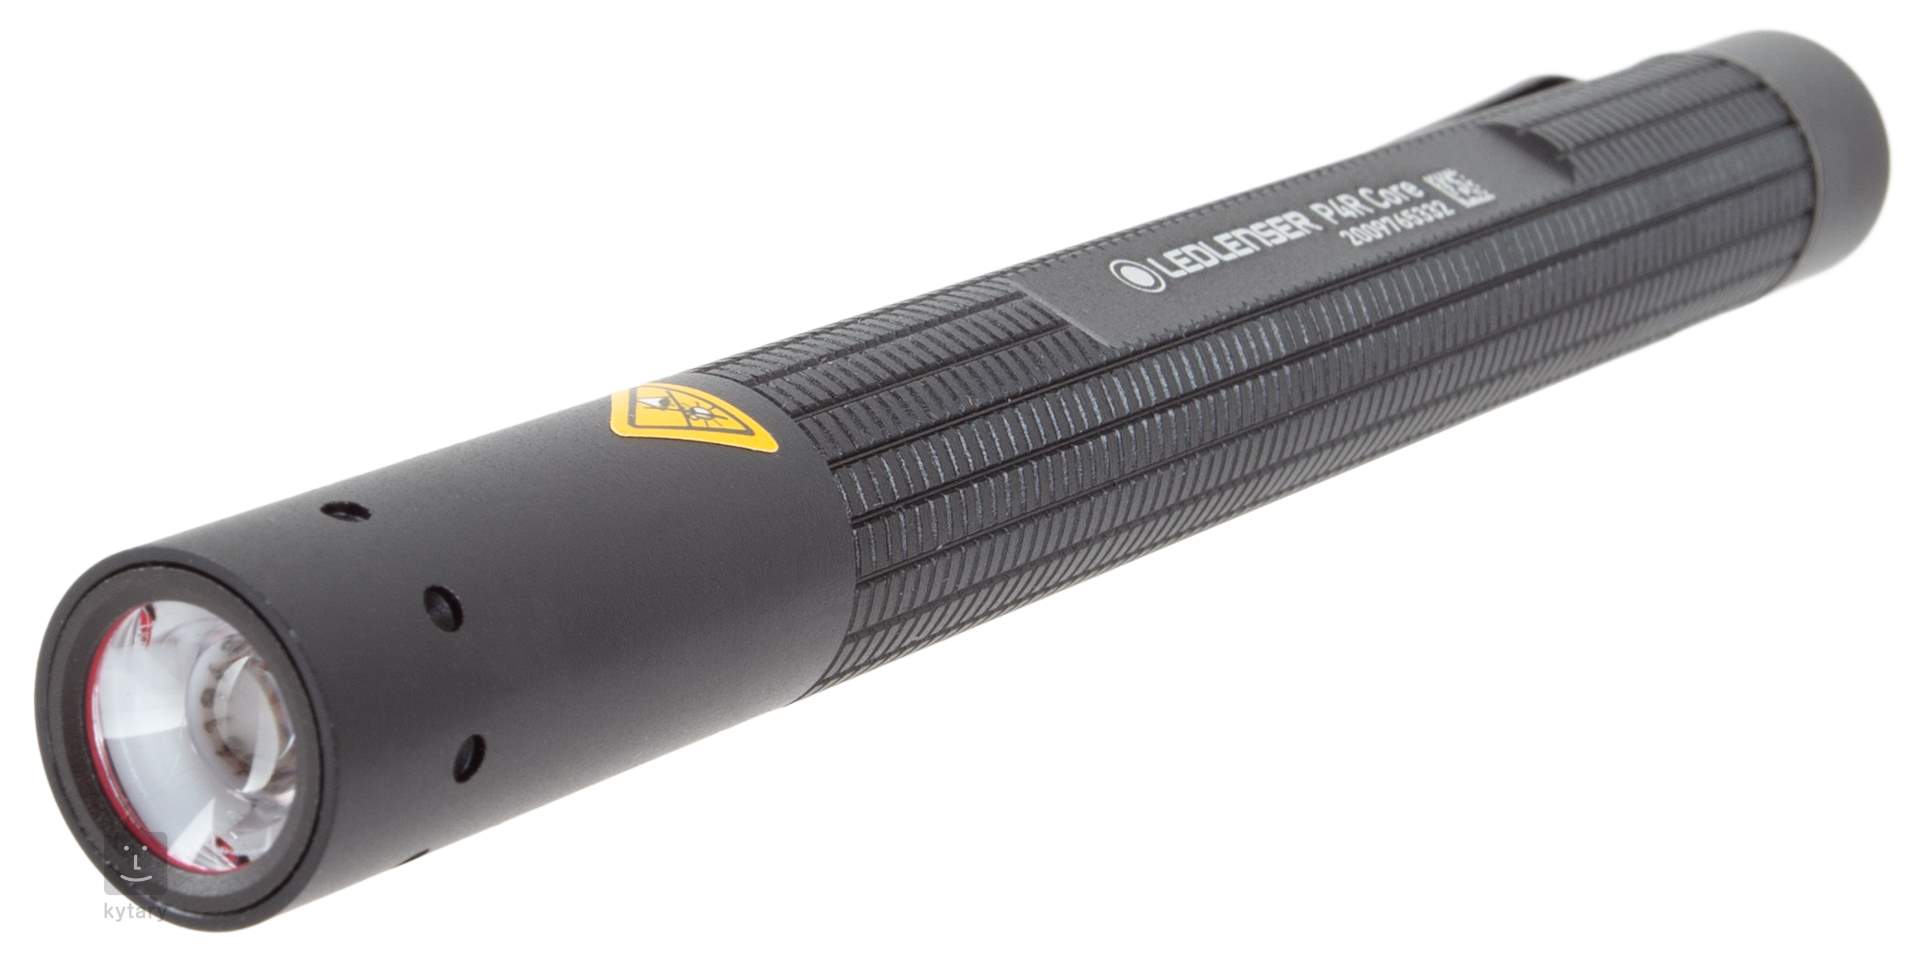 LEDLenser P4R Work Rechargeable Penlight Flashlight - Adjustable Focus